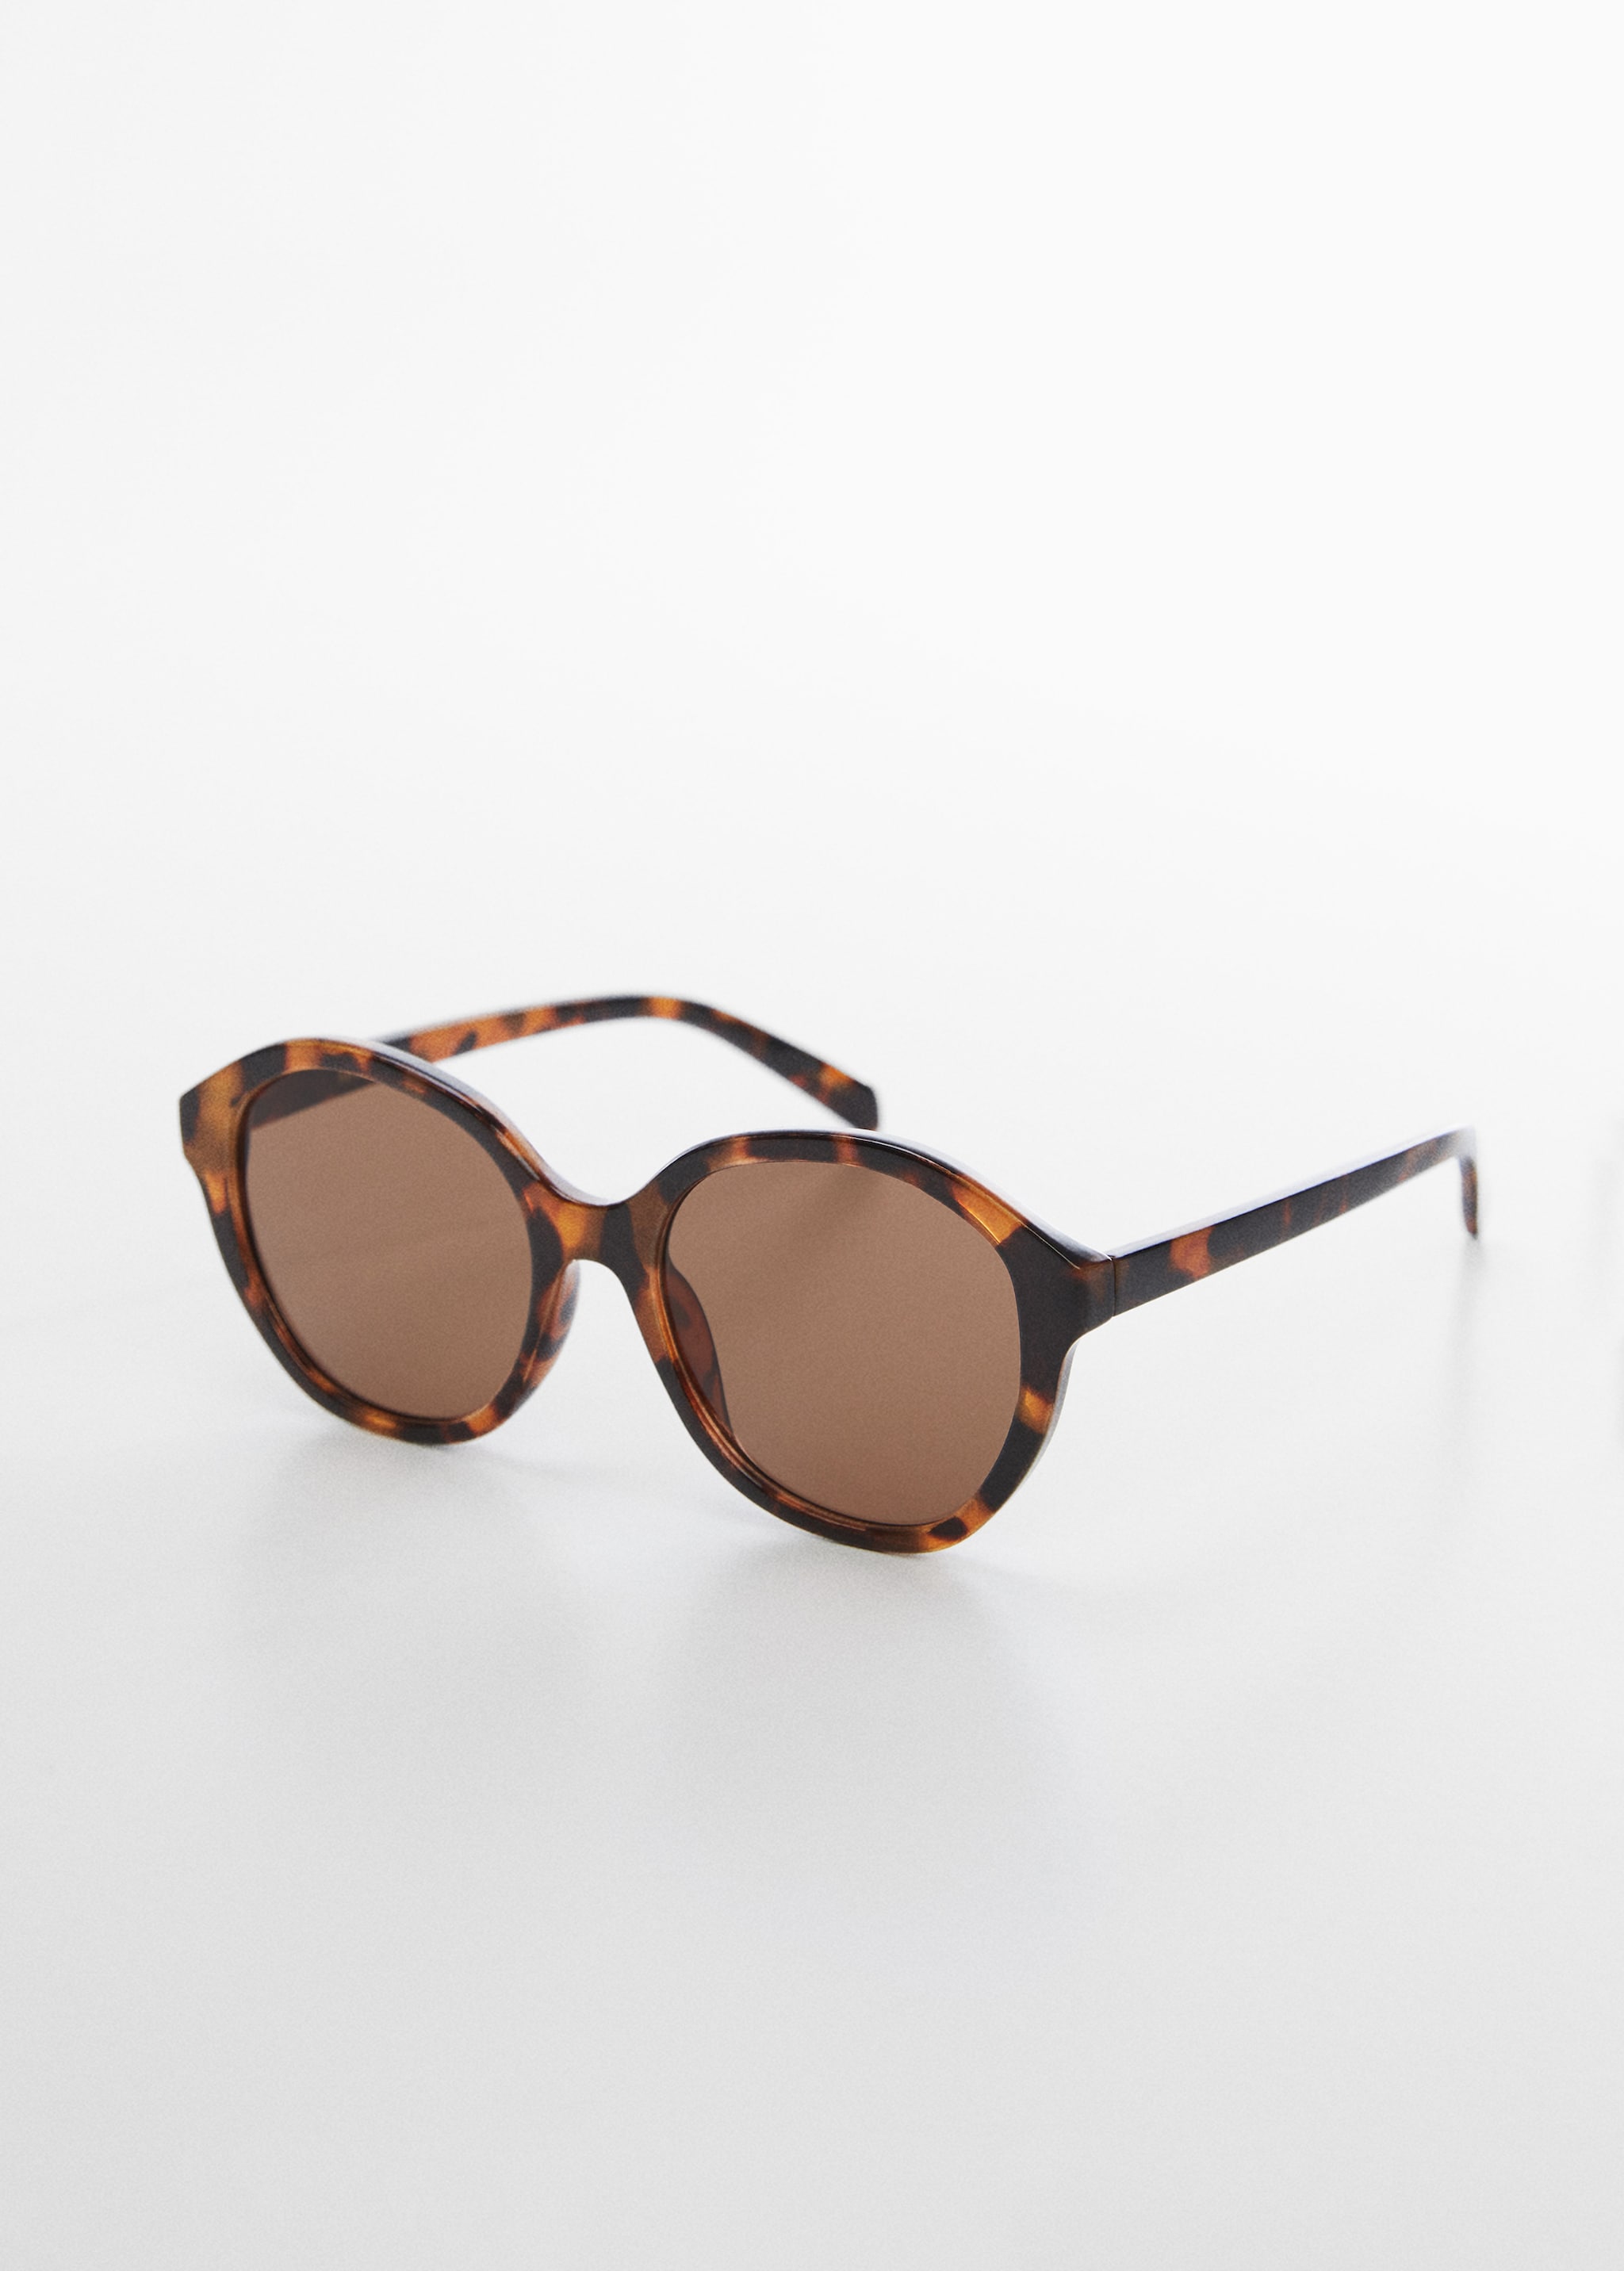 Tortoiseshell rounded sunglasses - Medium plane